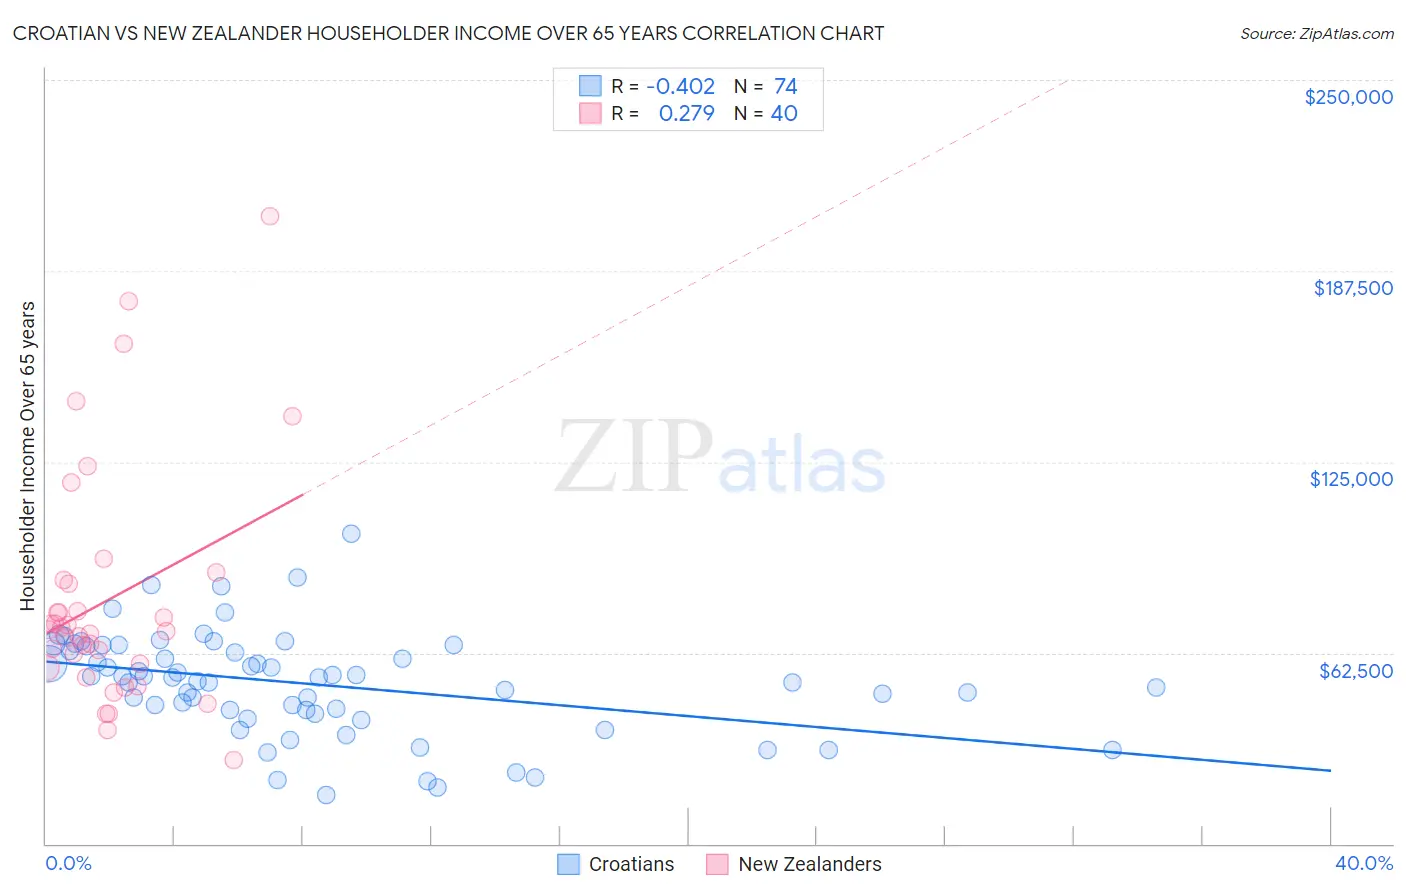 Croatian vs New Zealander Householder Income Over 65 years